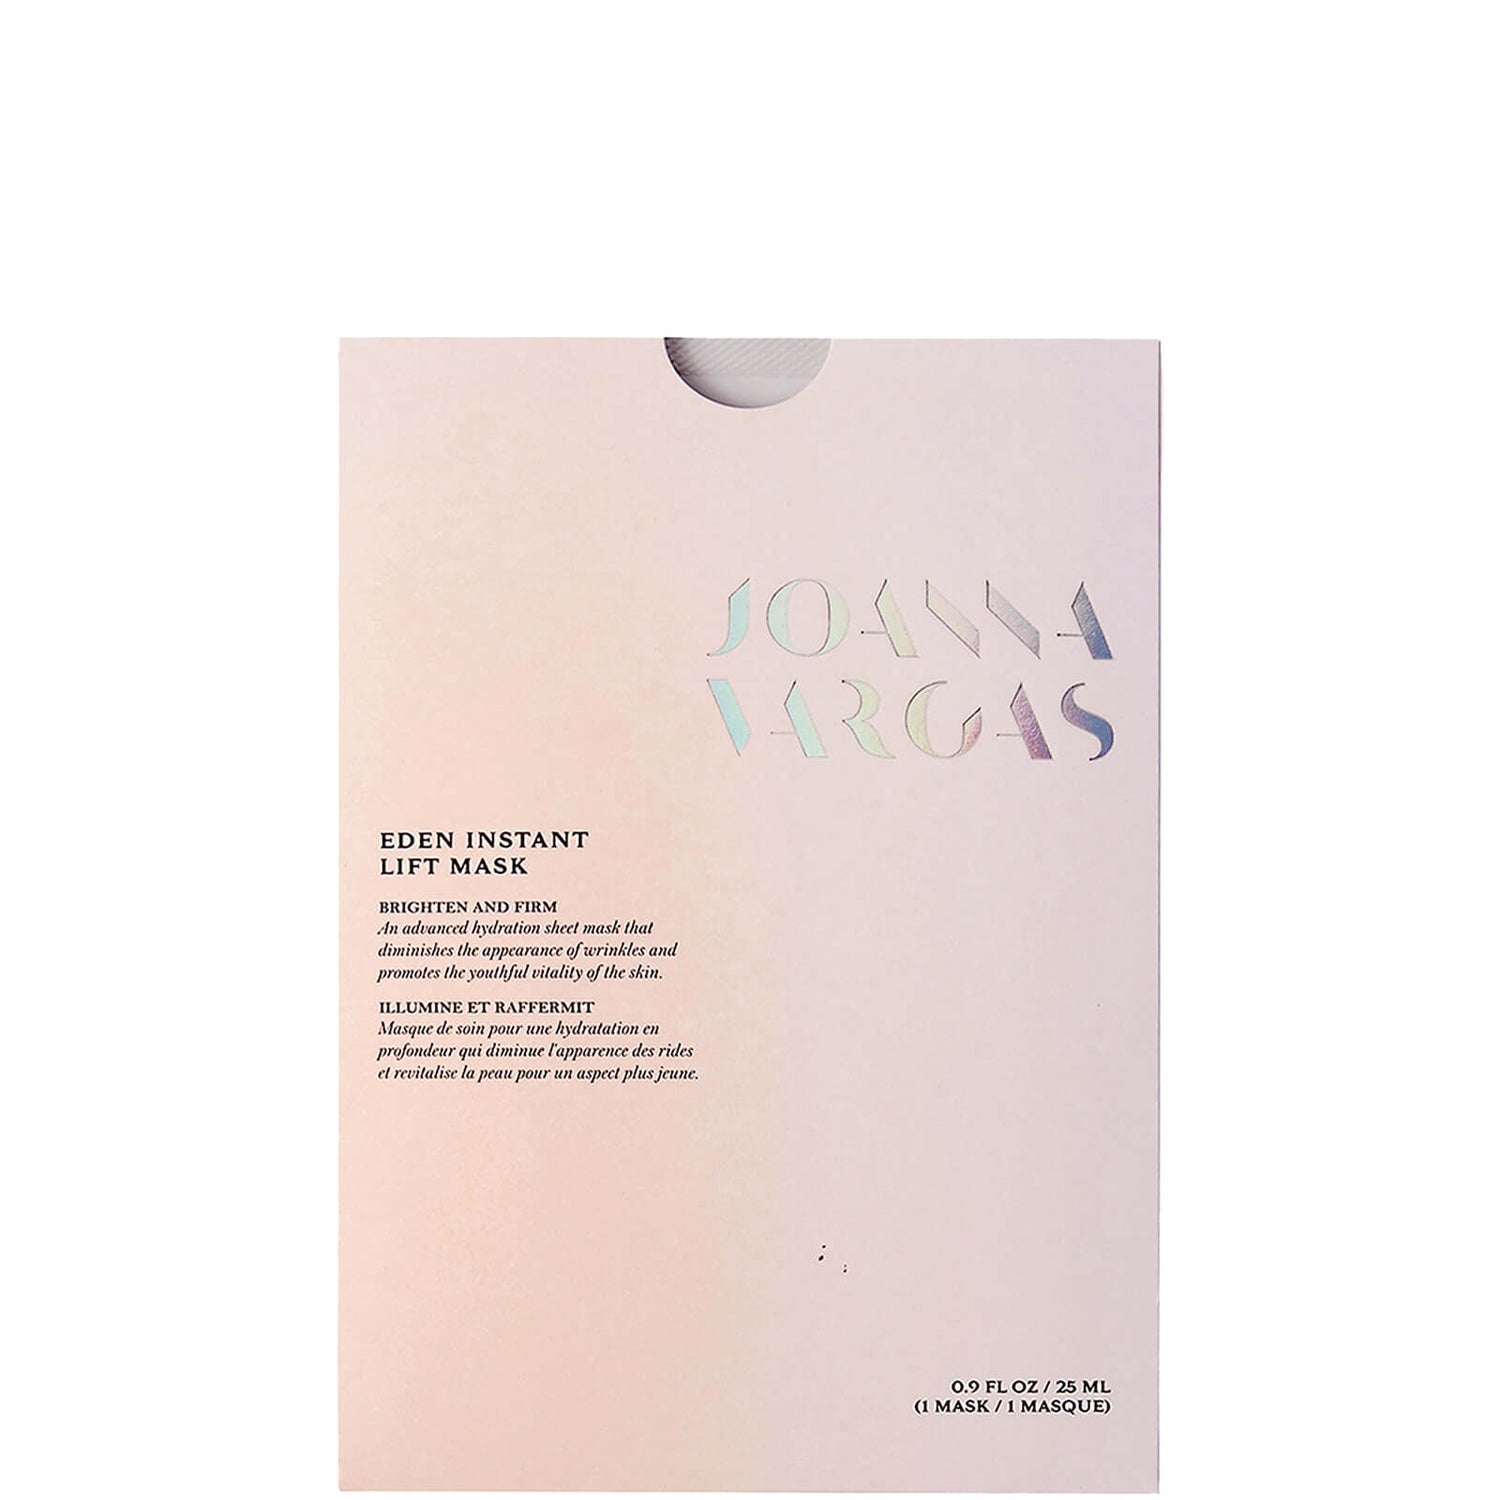 Joanna Vargas Eden Instant Lift Mask (1 Sheet)